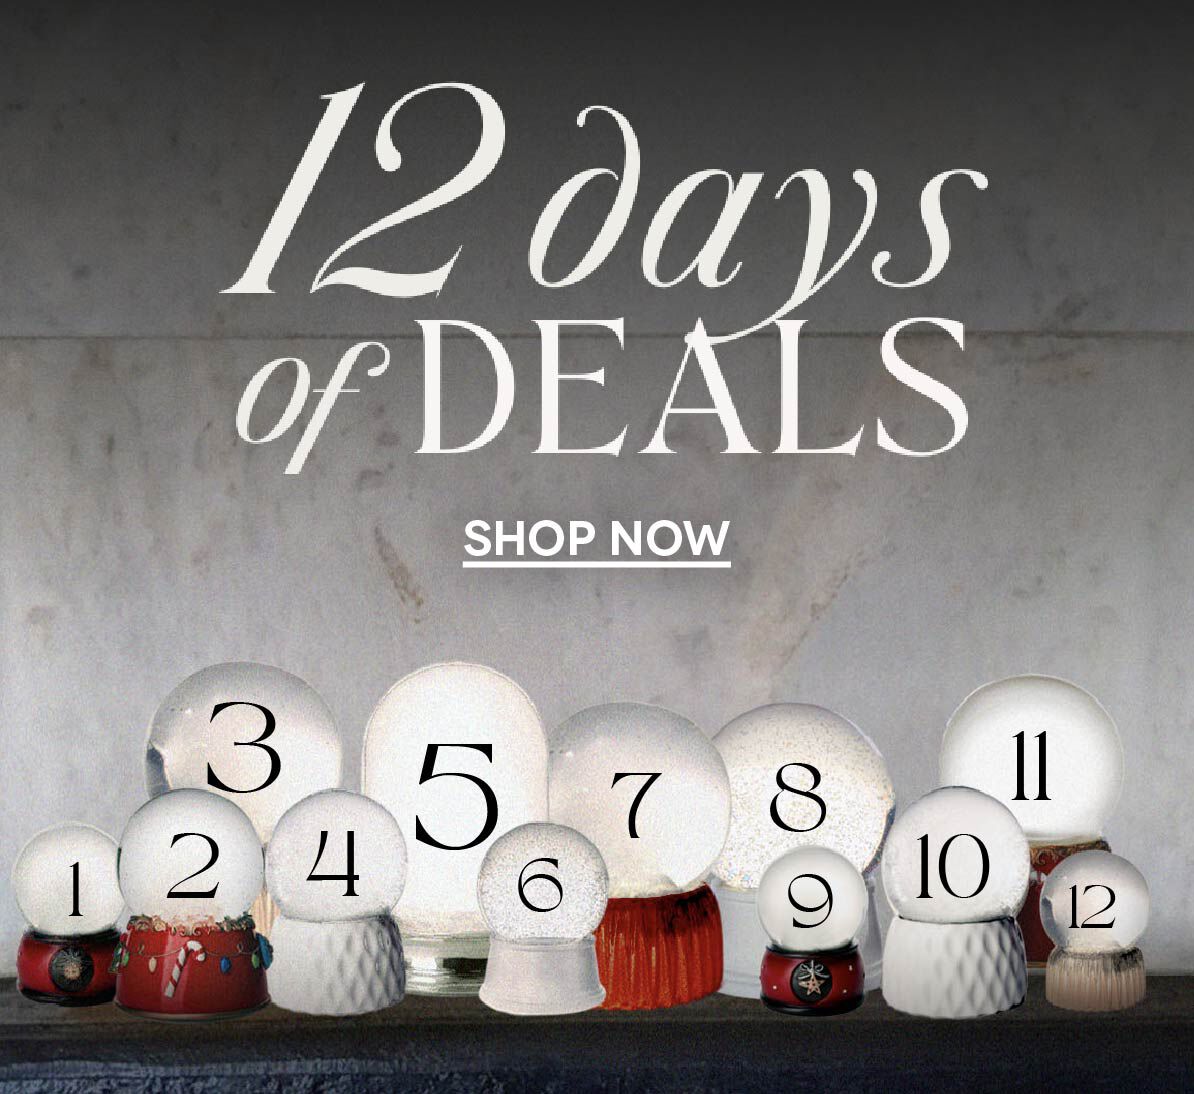 Shop the 12 days of Deals